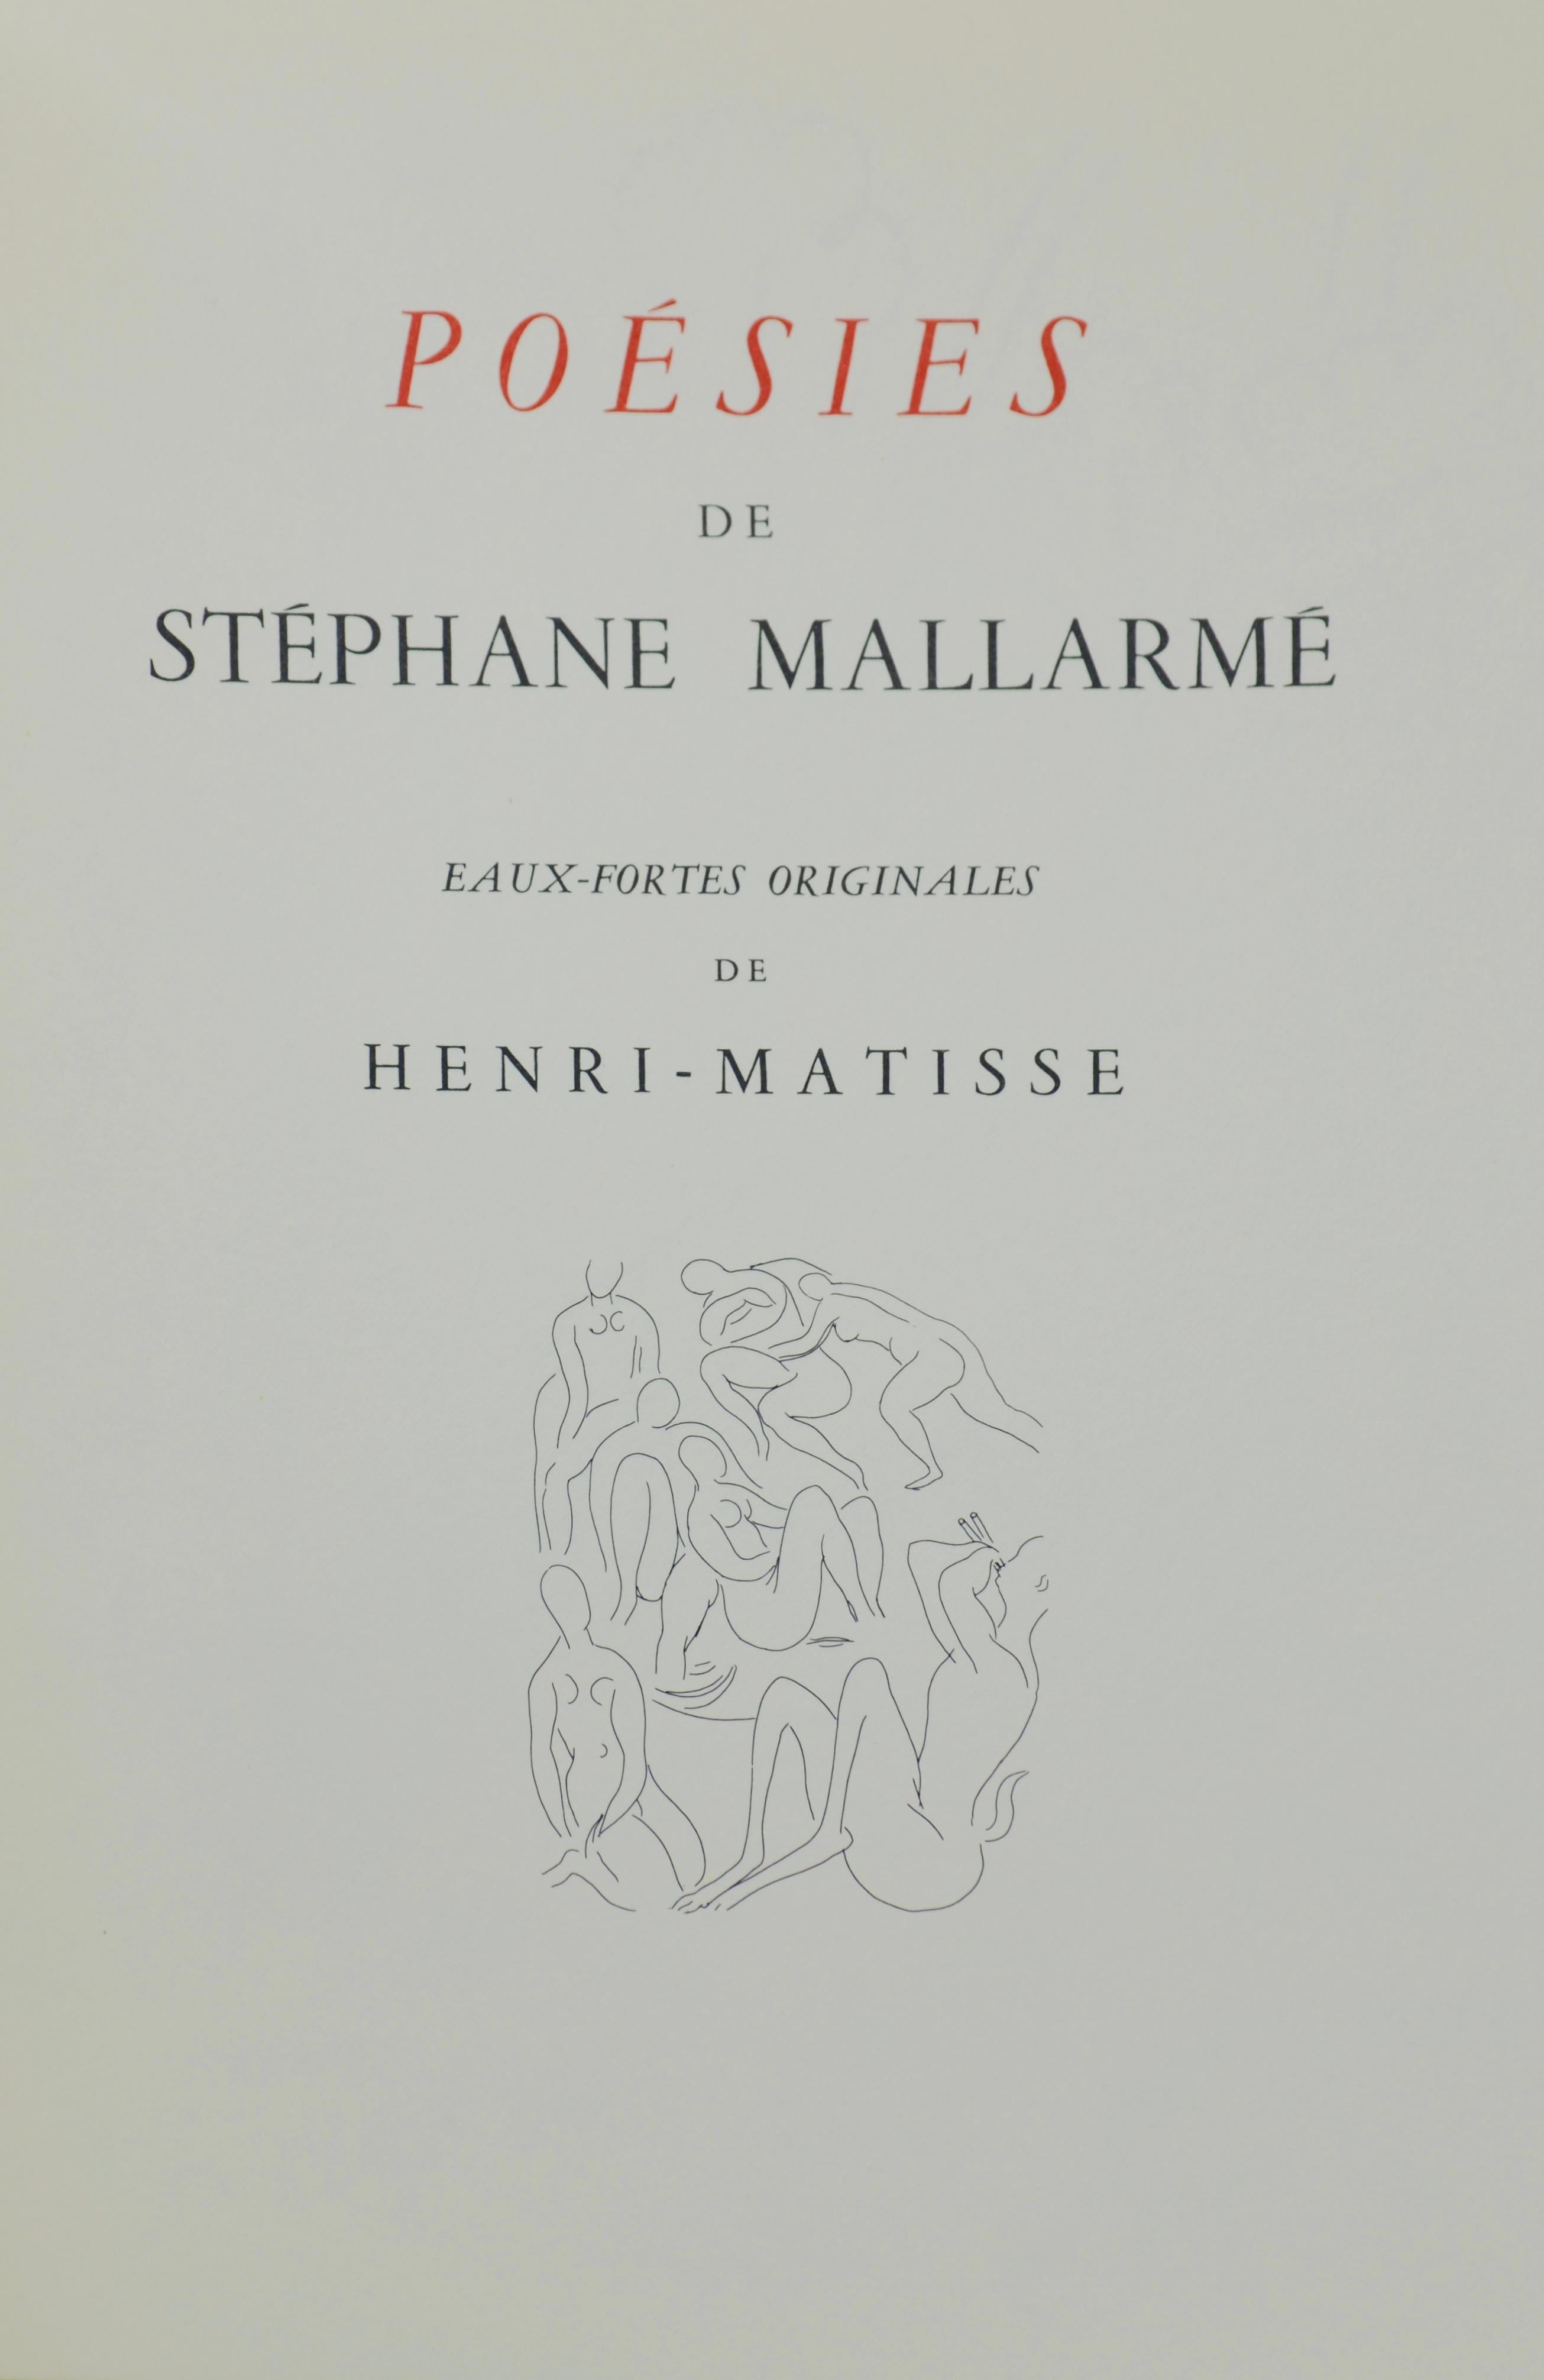 Matisse, Portrait of E. Poe, Poésies (after) For Sale 1